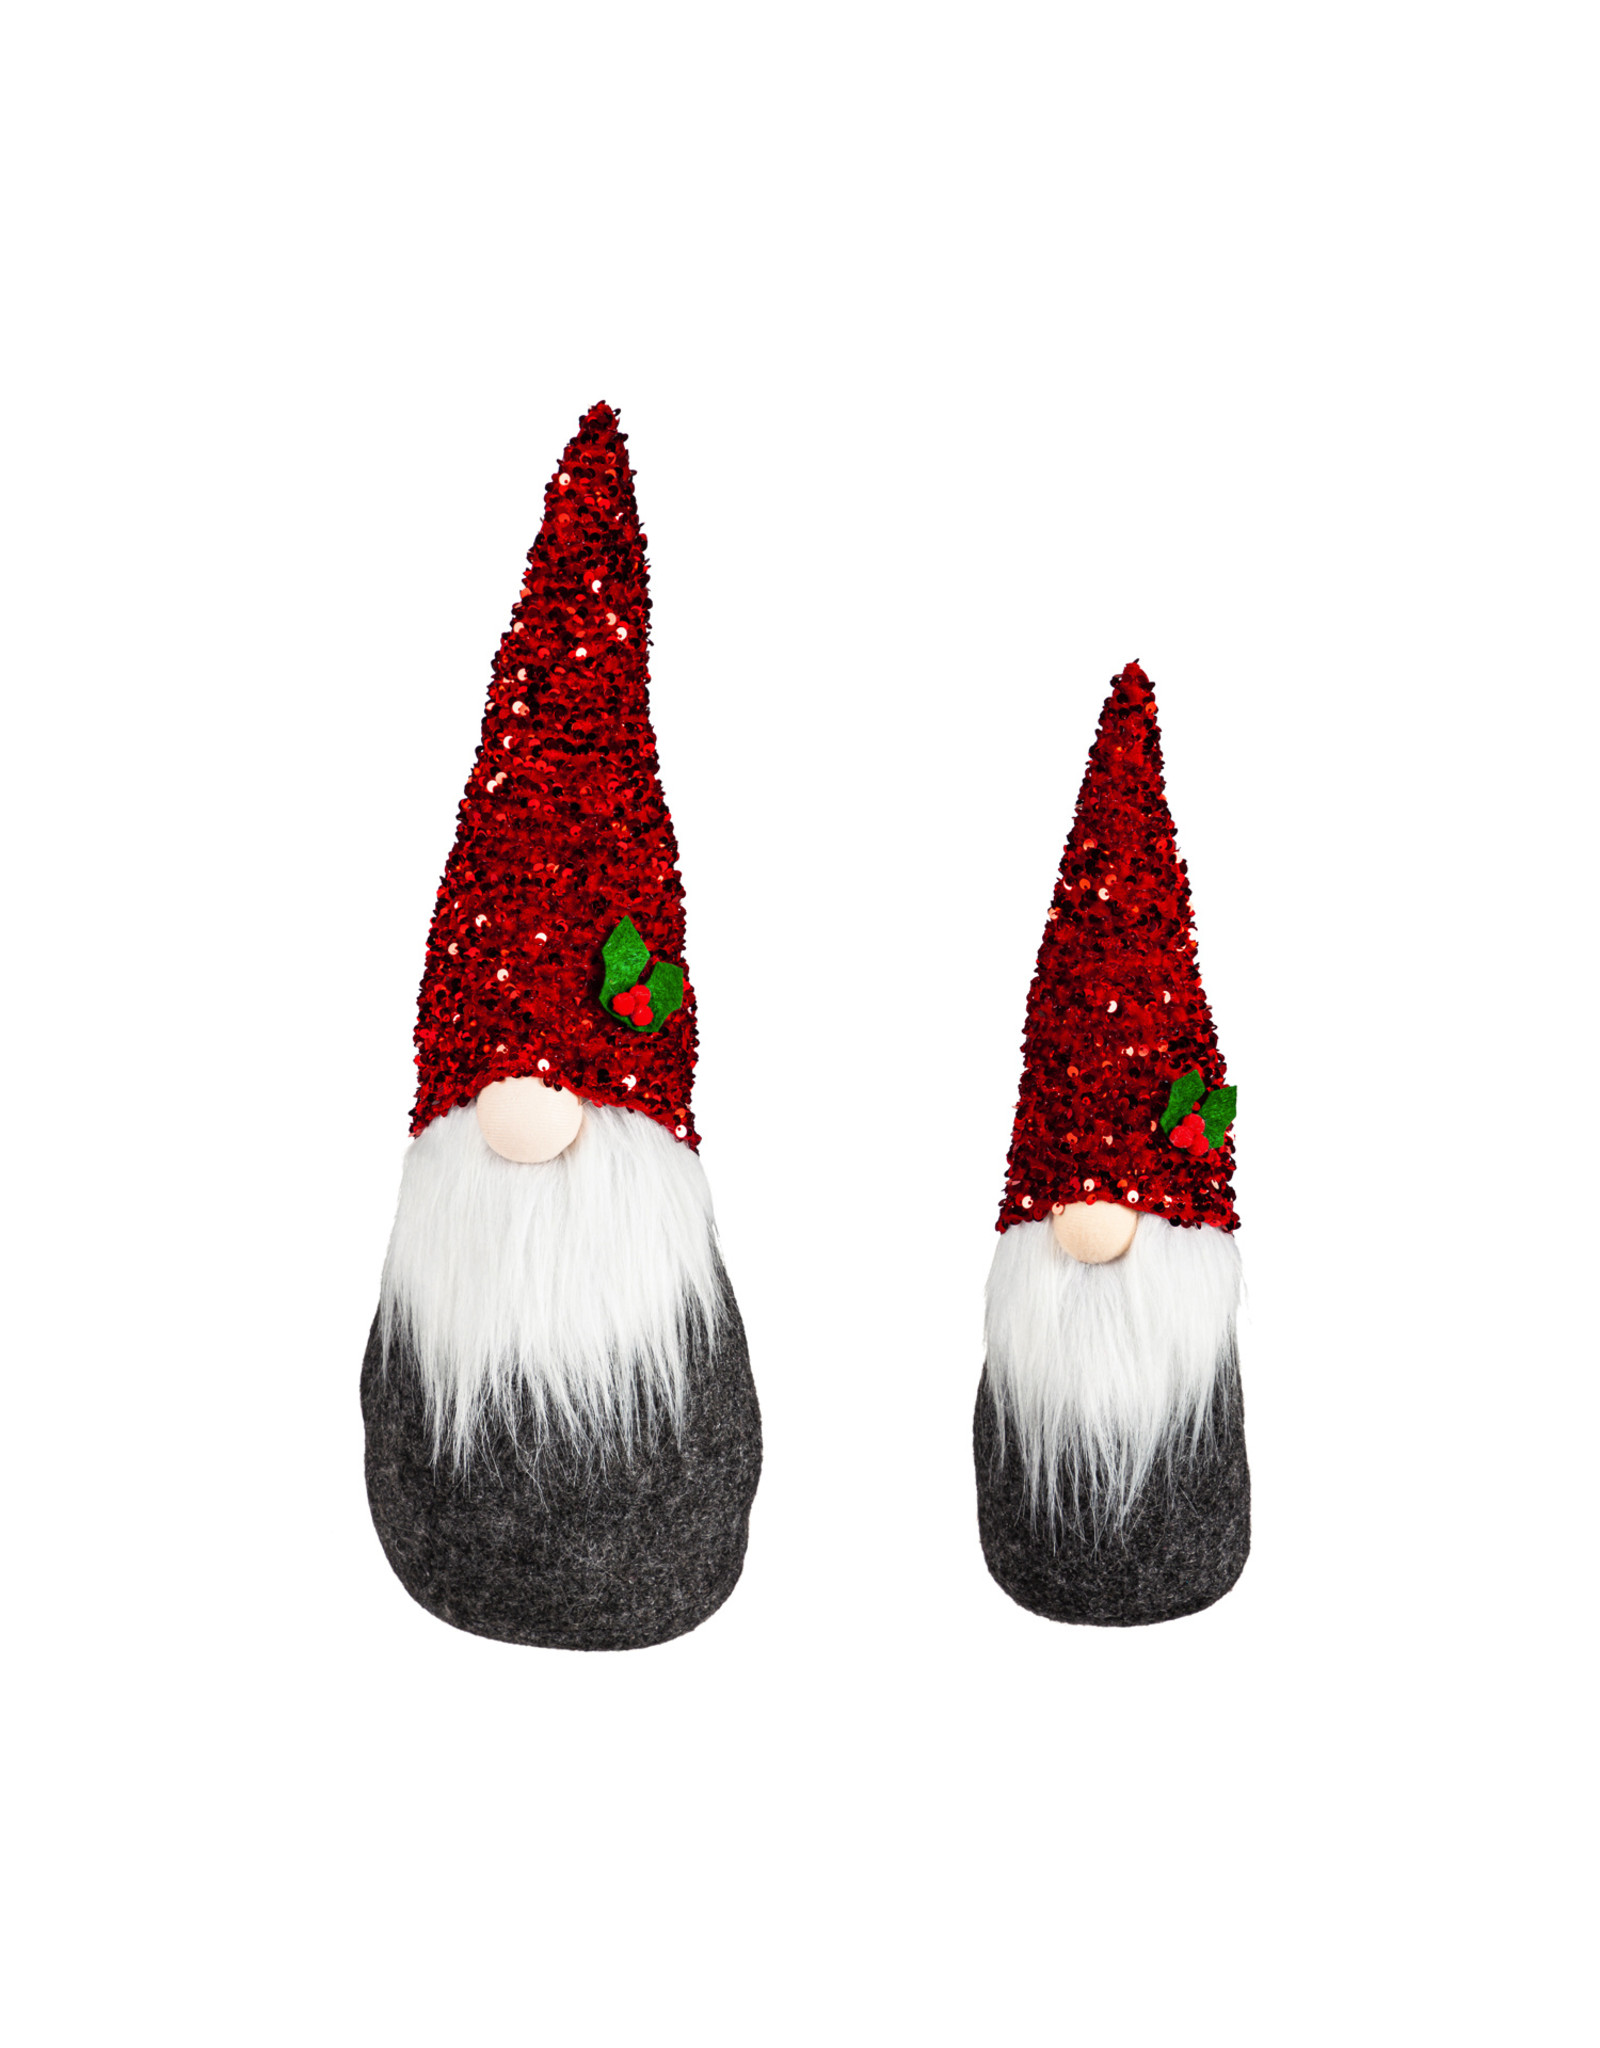 Personalized Festive Gnome Wine Glasses, Set of 2